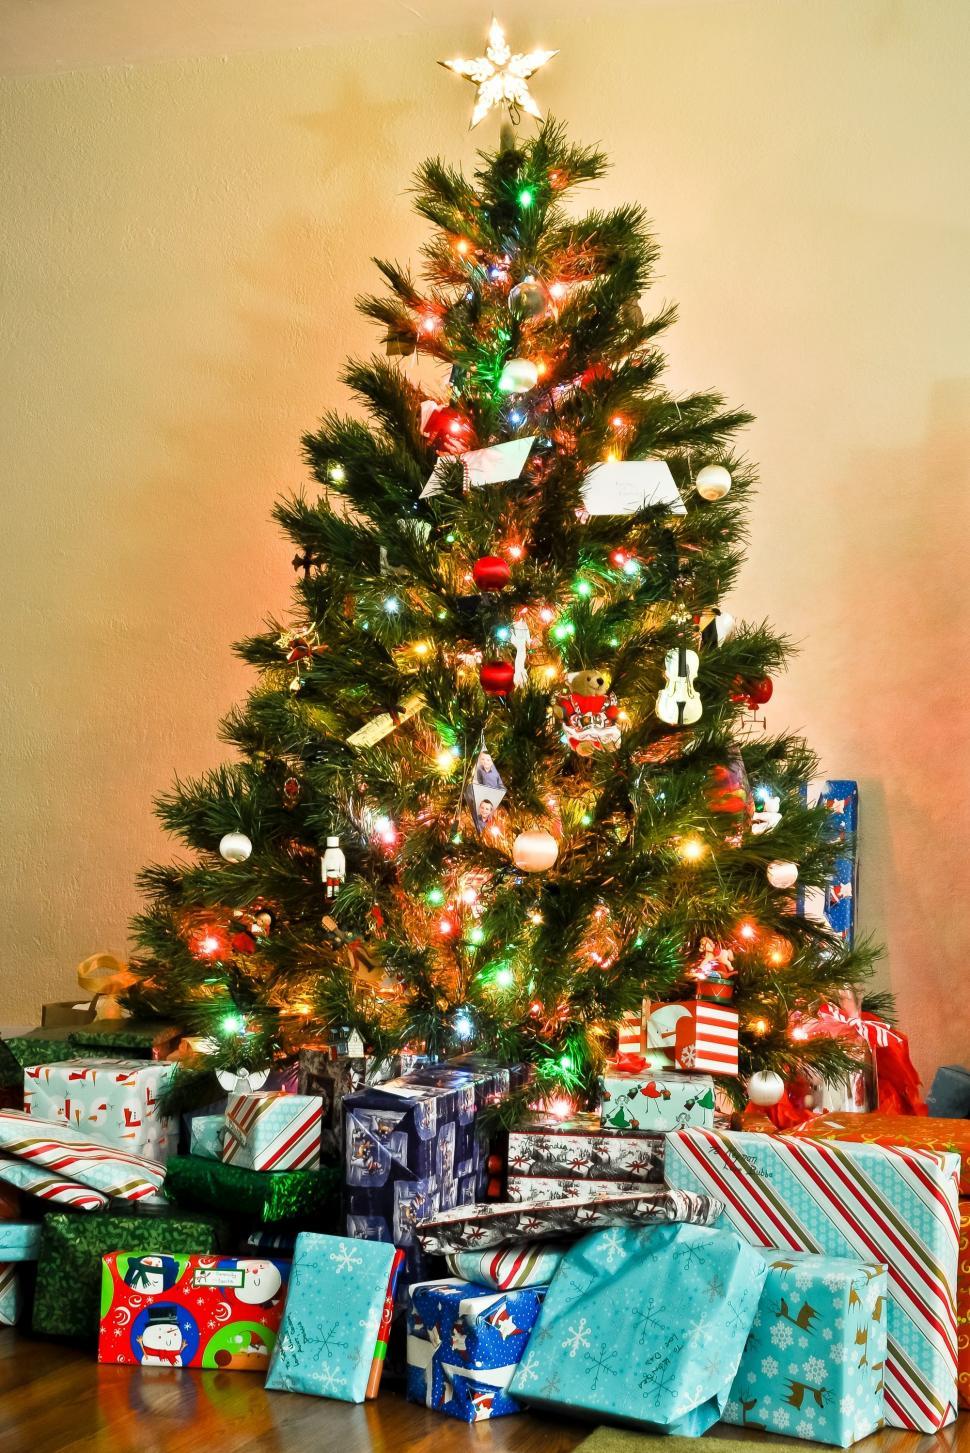 Free Image of Christmas Tree with lights  